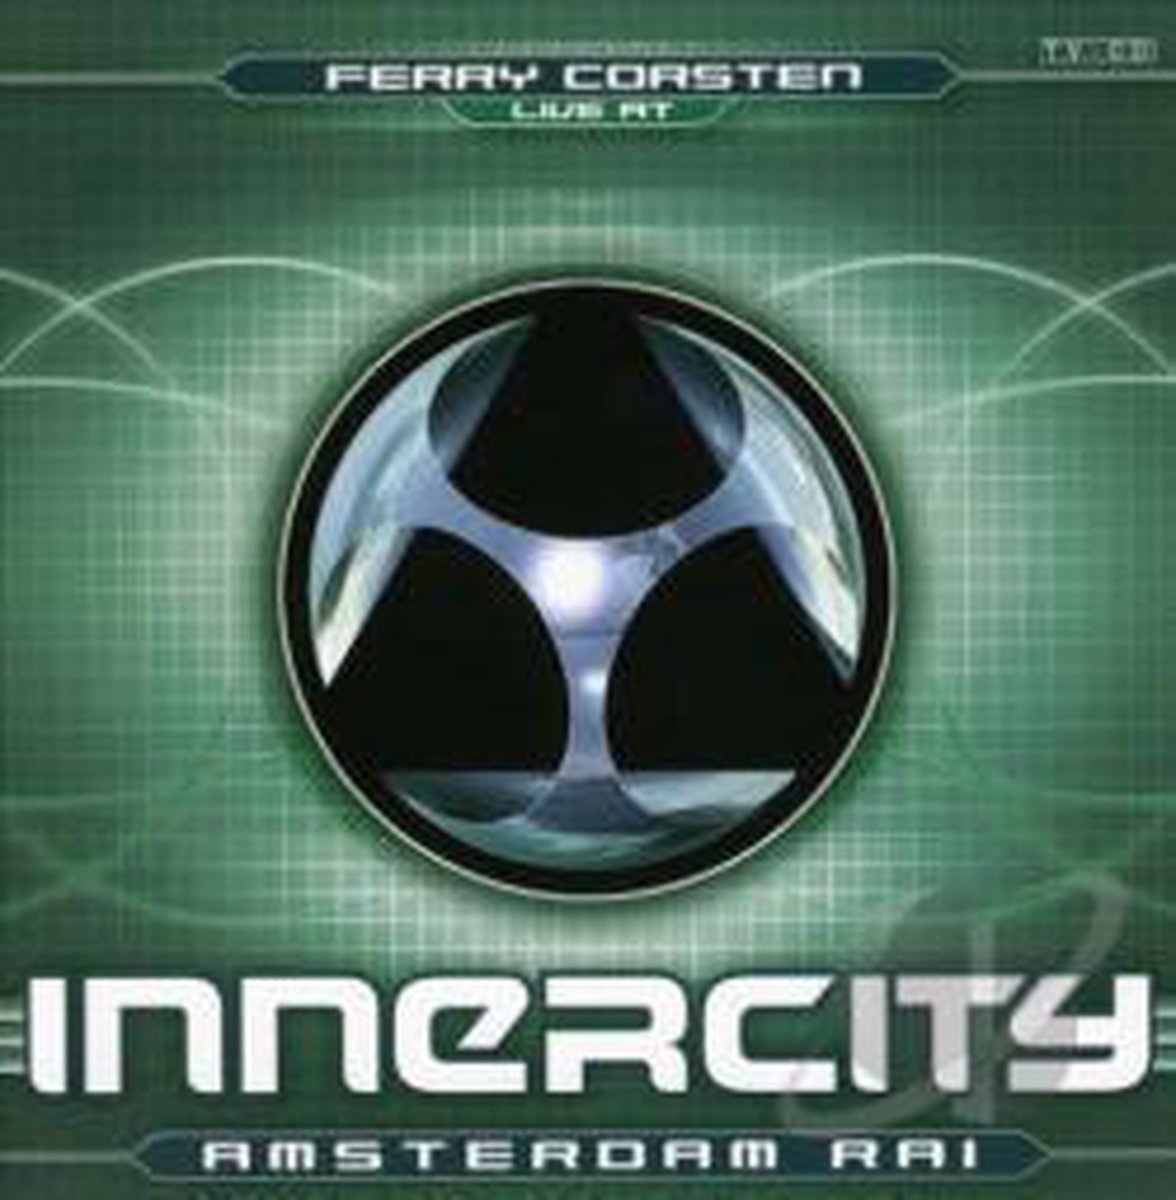 Live At Innercity - Amsterdam Rai - Ferry Corsten